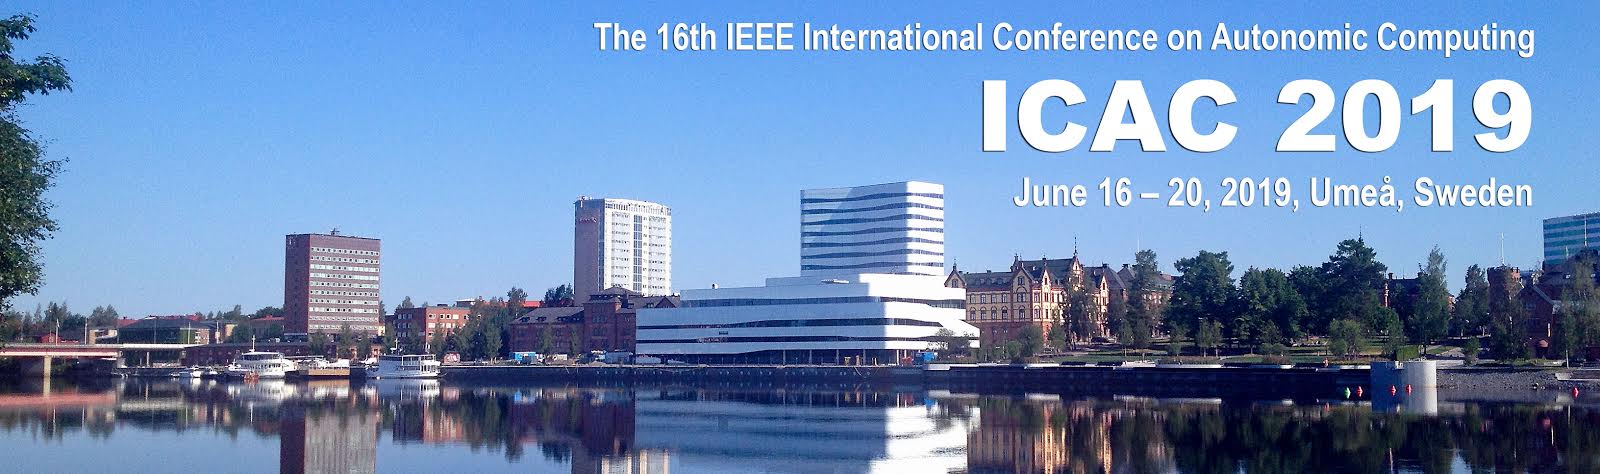 ICAC 2019 - The International Conference on Autonomic Computing